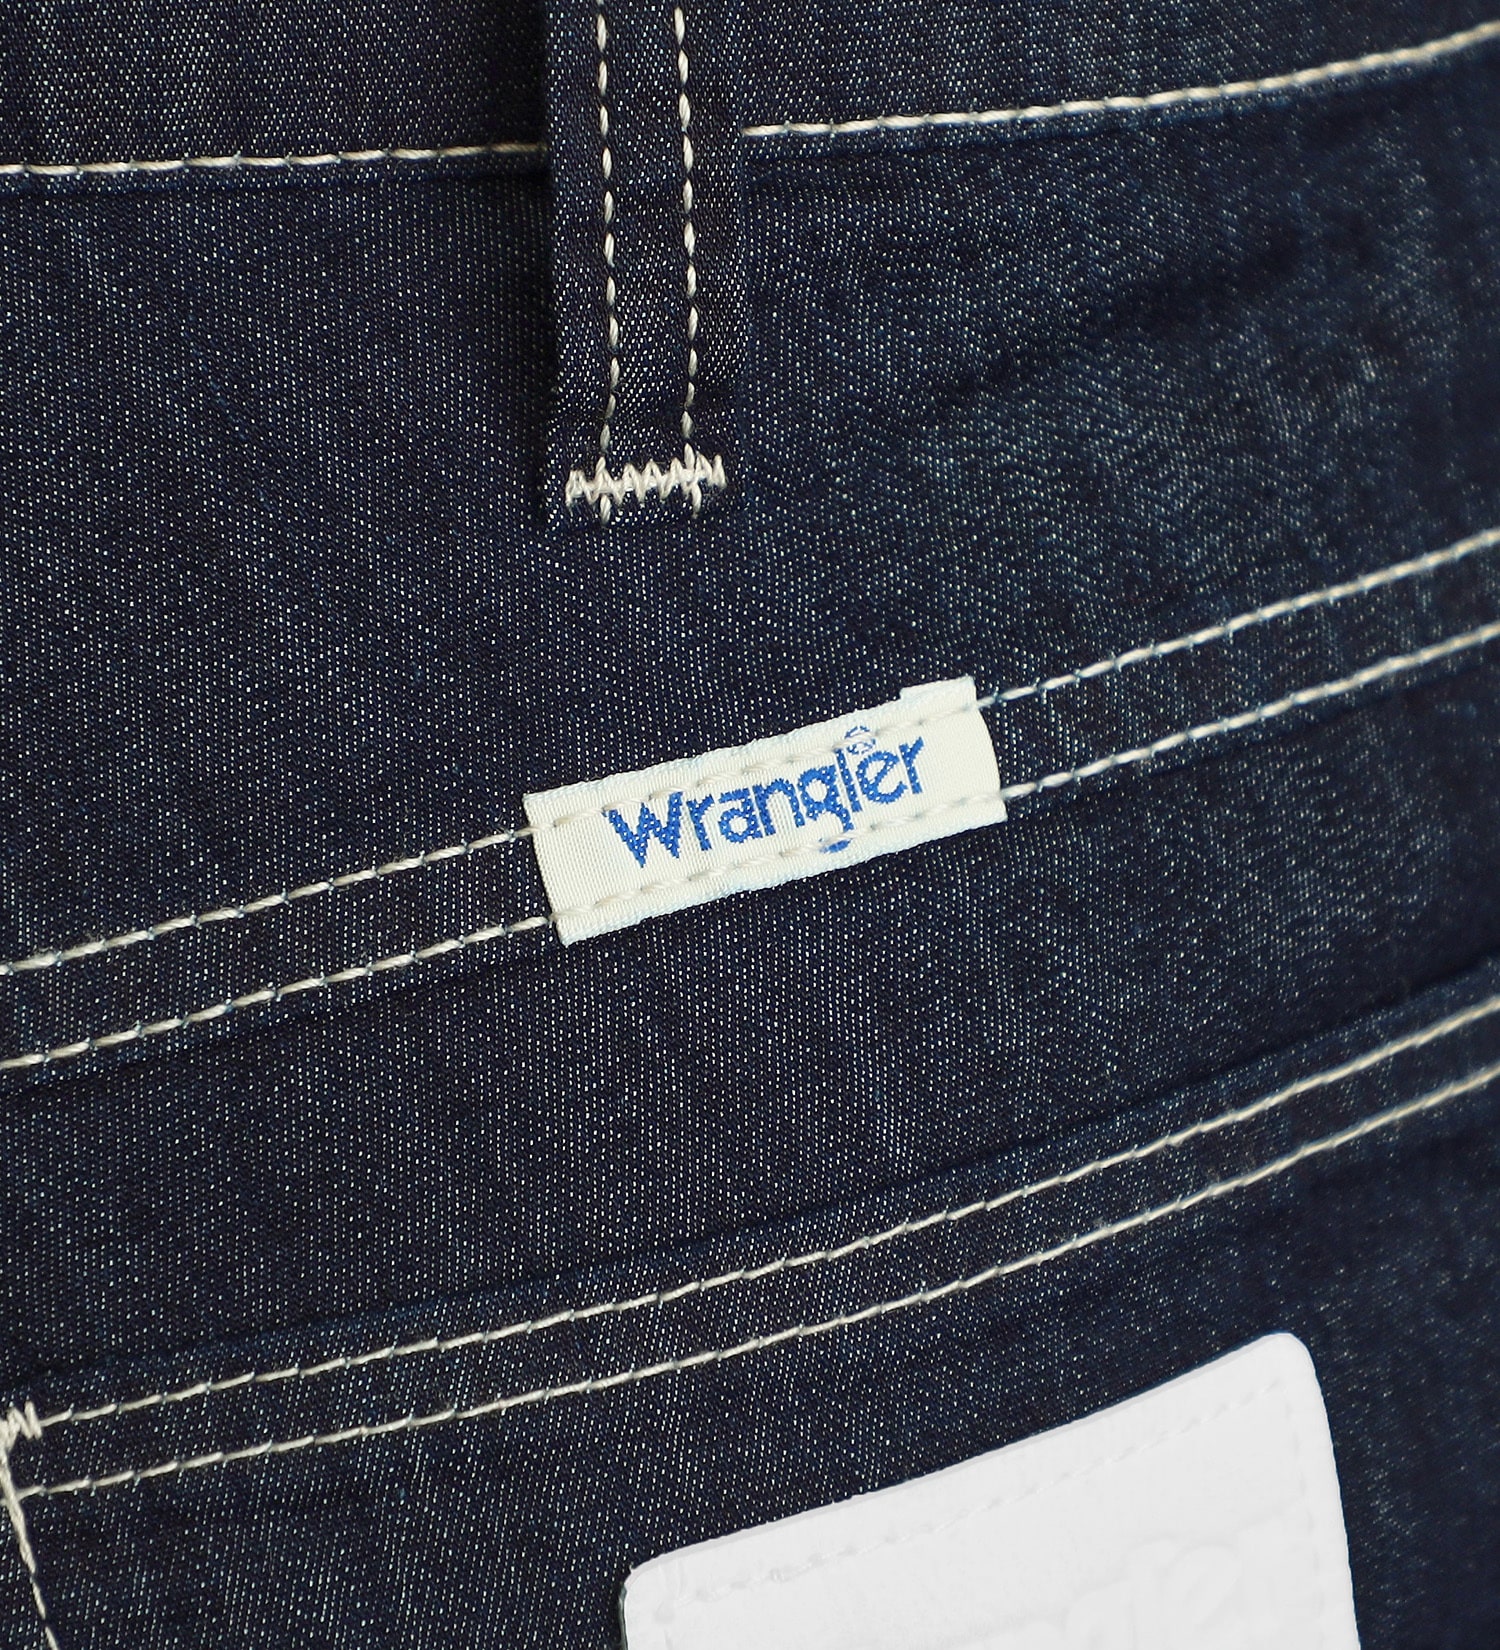 Wrangler(ラングラー)の【涼・COOL】ドライタッチストレートパンツ|パンツ/デニムパンツ/メンズ|インディゴブルー